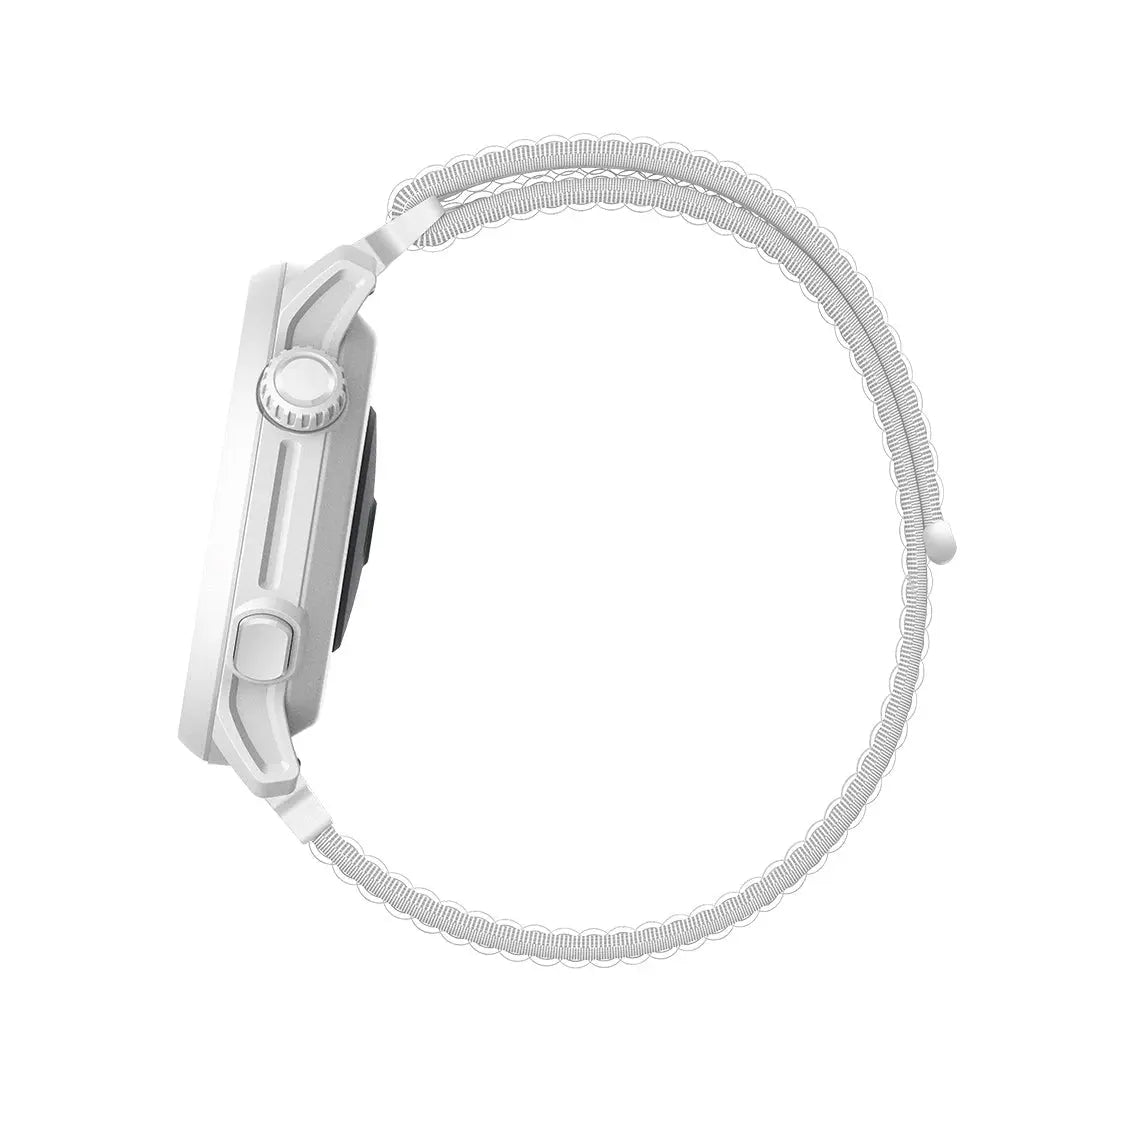 COROS Pace 2 Premium GPS watch - White w/ Nylon Band